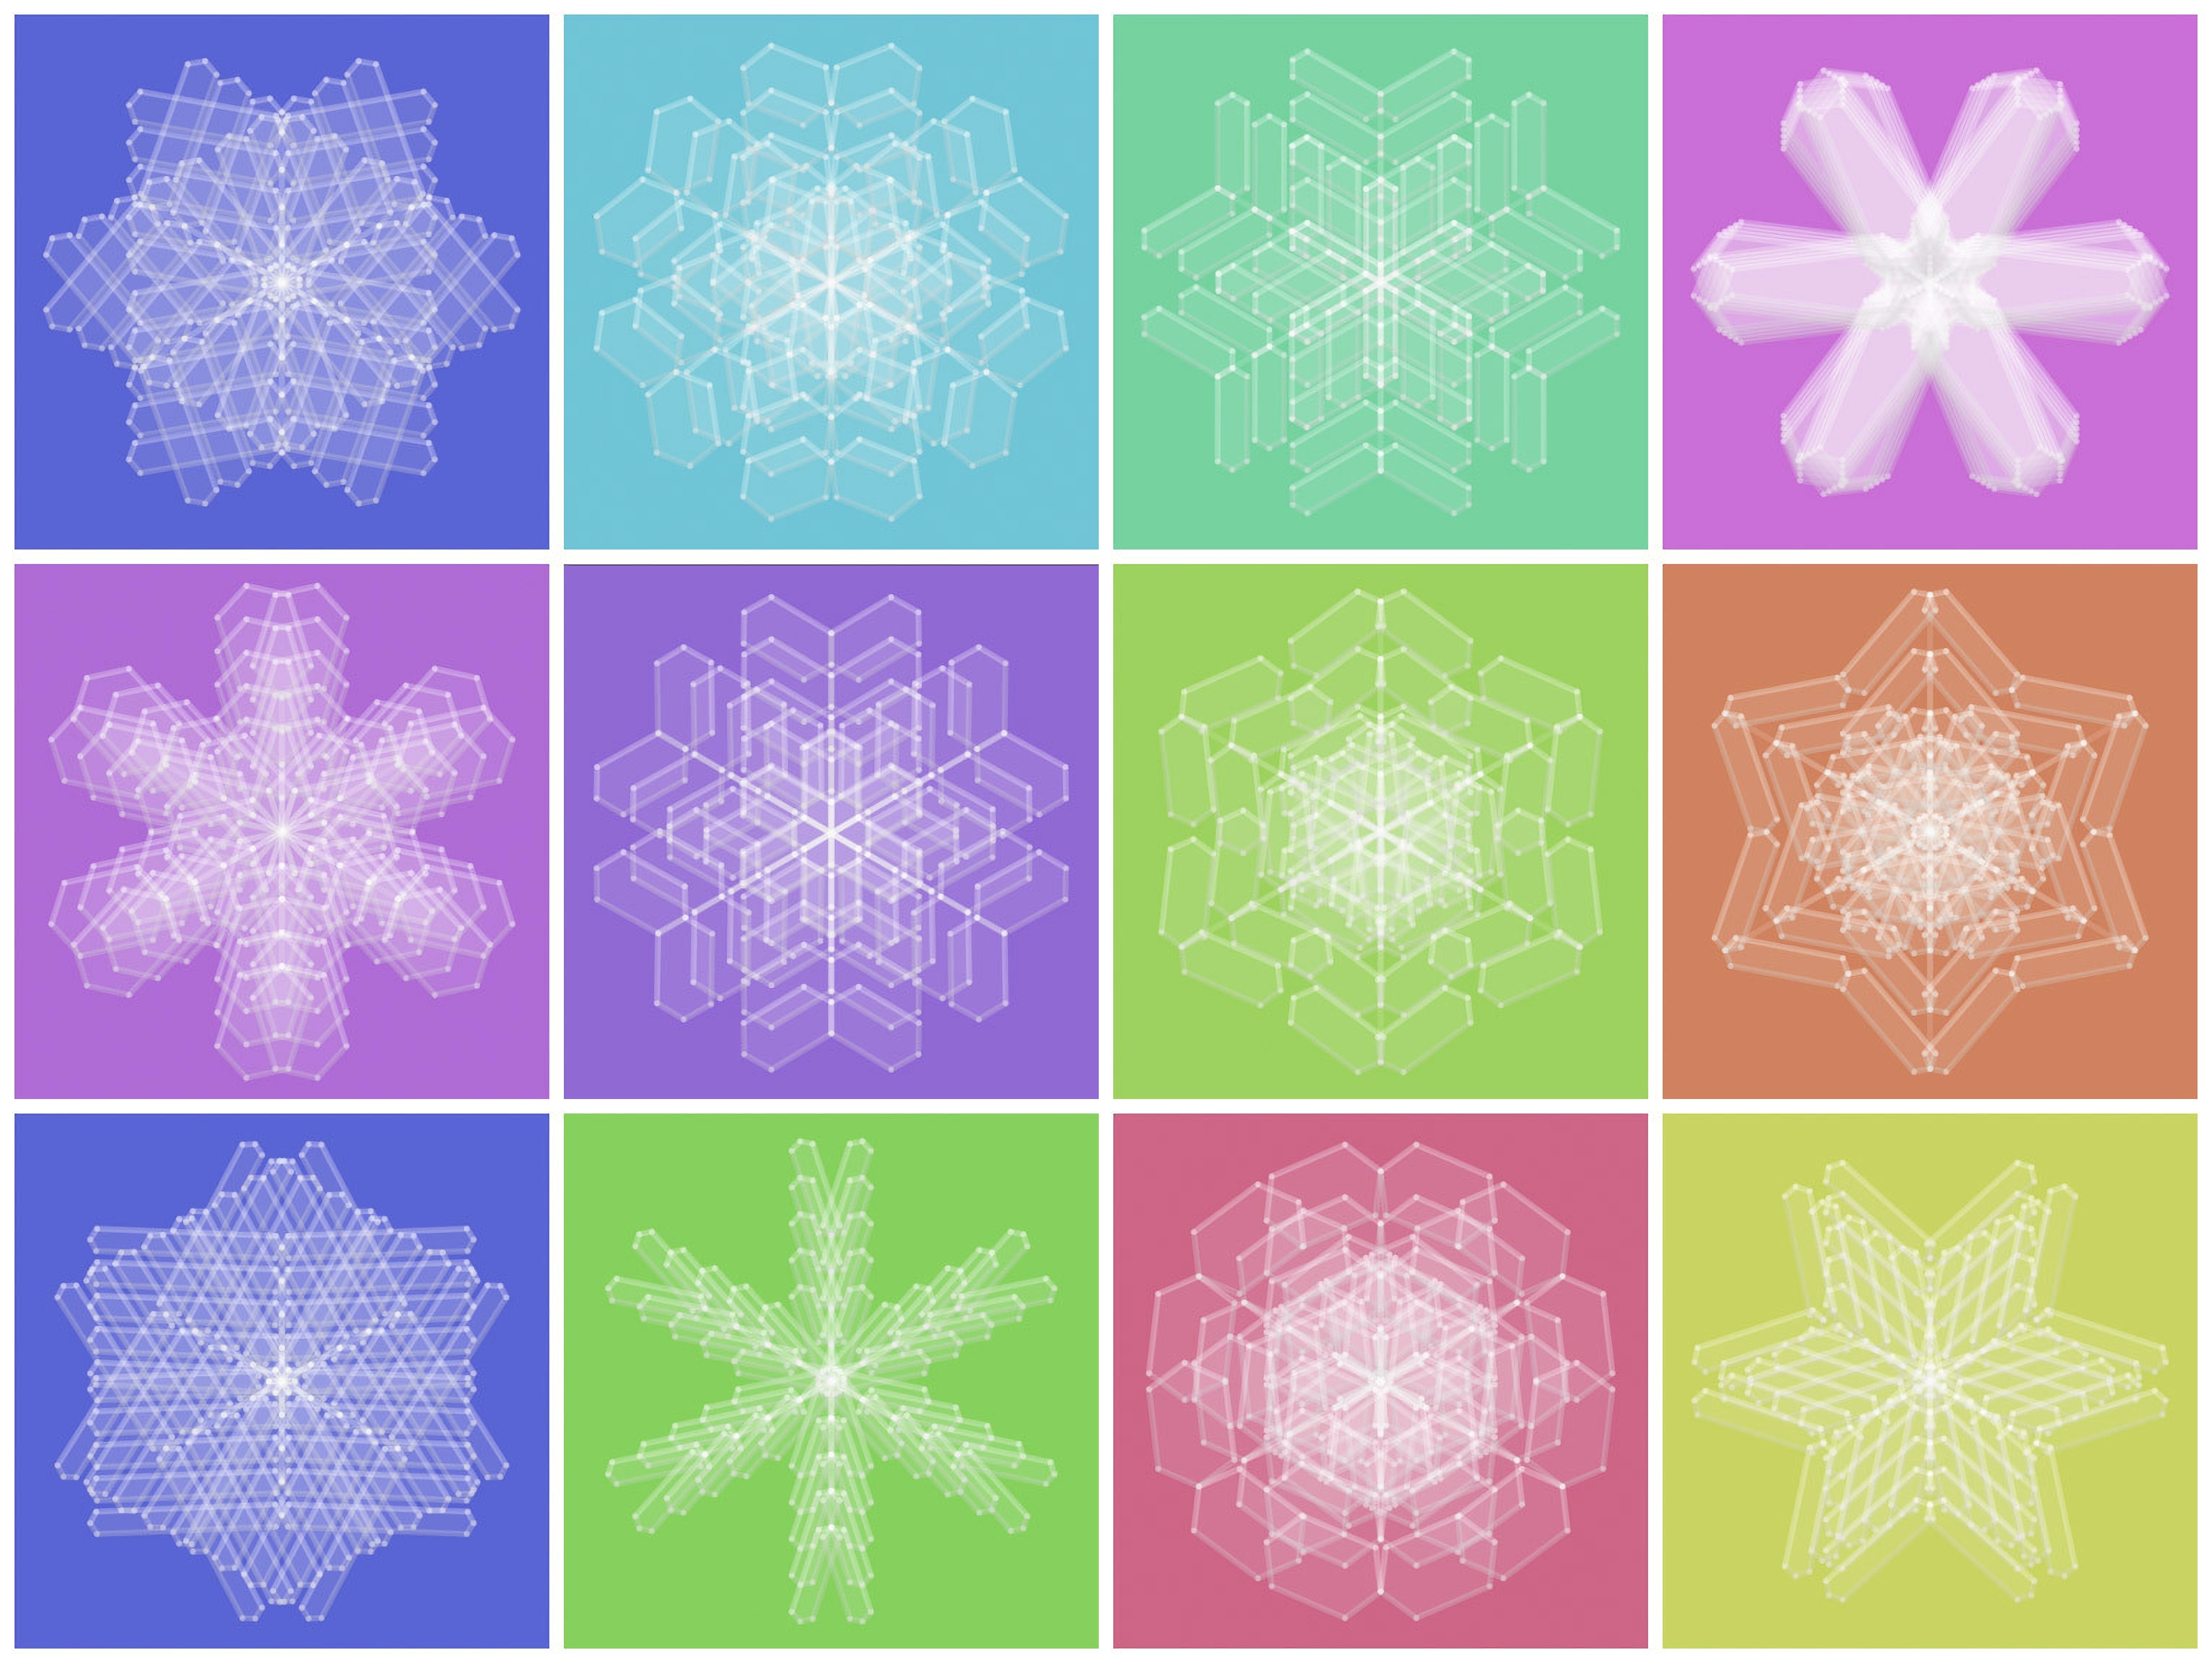 Colourful generative snowflake variations